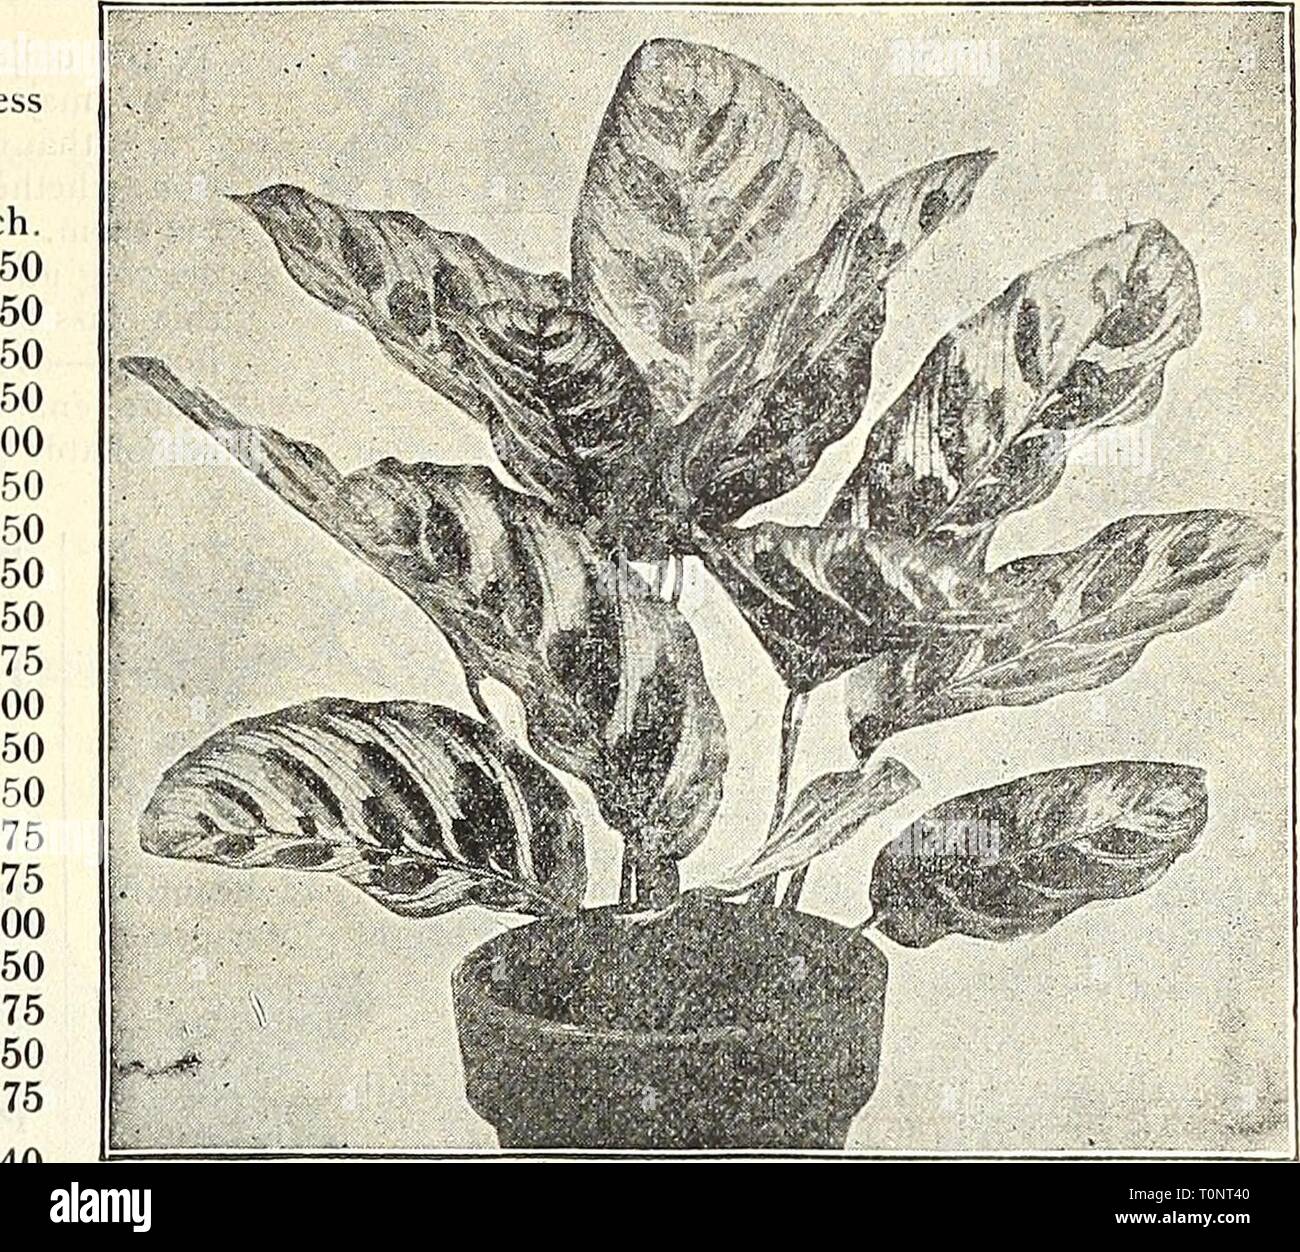 Dreer's 1908 autumn catalogue (1908) Dreer's 1908 autumn catalogue  dreers1908autumn1908henr Year: 1908  IHmRrADREa^Pl1llAD^LPHlAâ ^&gt;Aâ l^cARDEH^Â°oliEEhHoysE piANis; MARANTA. Valuable decorative stove plants, remarkable for the richness and beauty of their varied foliage. Each. Luciana |0 50 riakoyana 50 Masangeana (True).. riedia PIcta Mosella 1 Musaica Porteana Pulchella Regyana Rosea Lineata Sanderi 1 Spitzeriana Albert! Amabilis Bachemiana ... BambusÂ£efolia . Bella Costata Glabra Chantrieri Dealbata Eximea Qouletti Goveniana Illustris Iconlfera Each. .10 50 50 50 50 . 25 . 75 . 50 50  Stock Photo